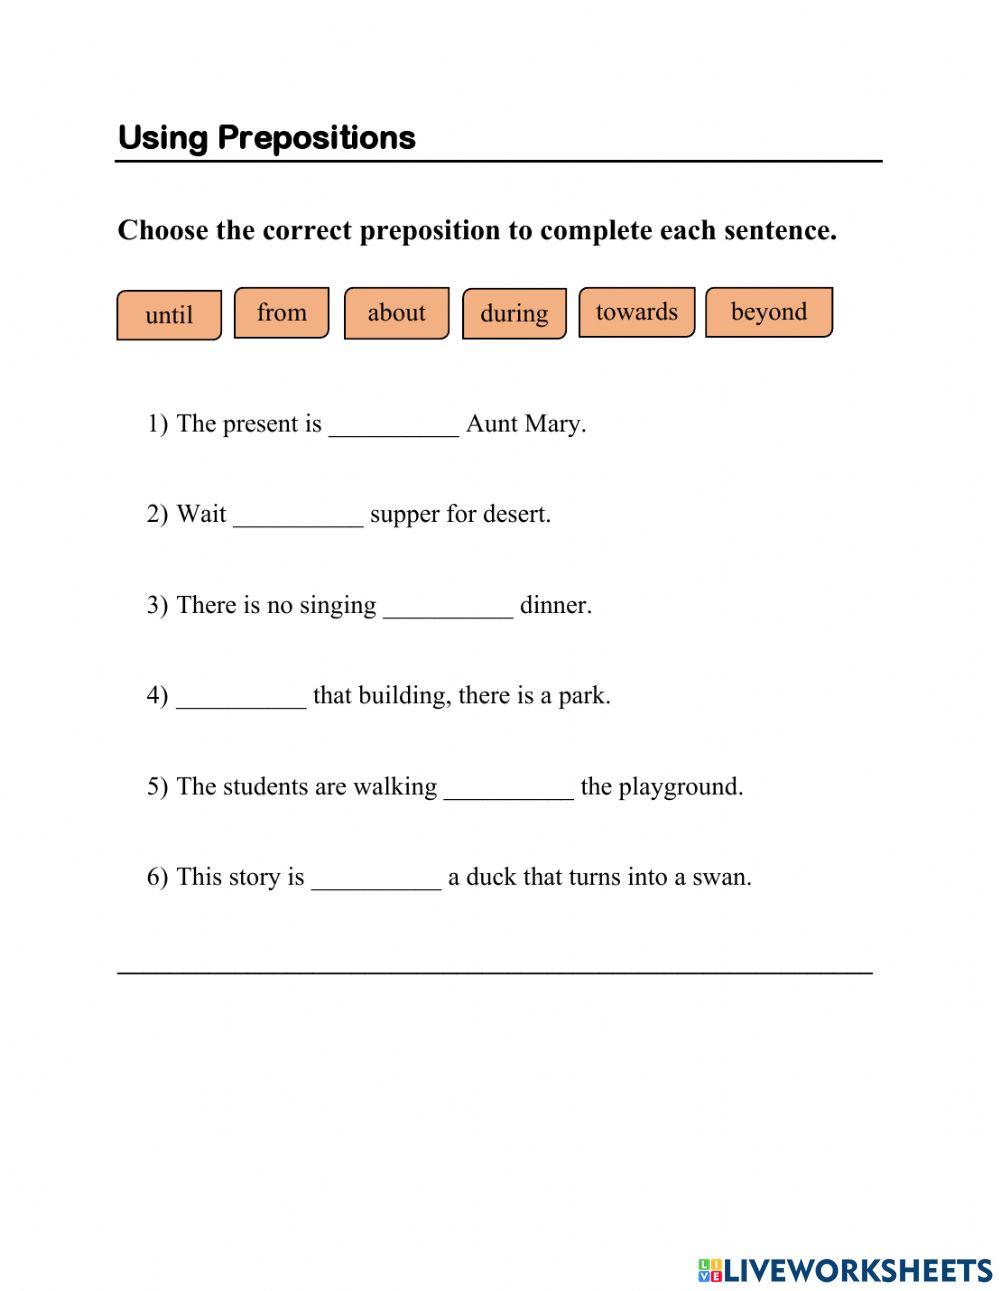 Using Prepositions